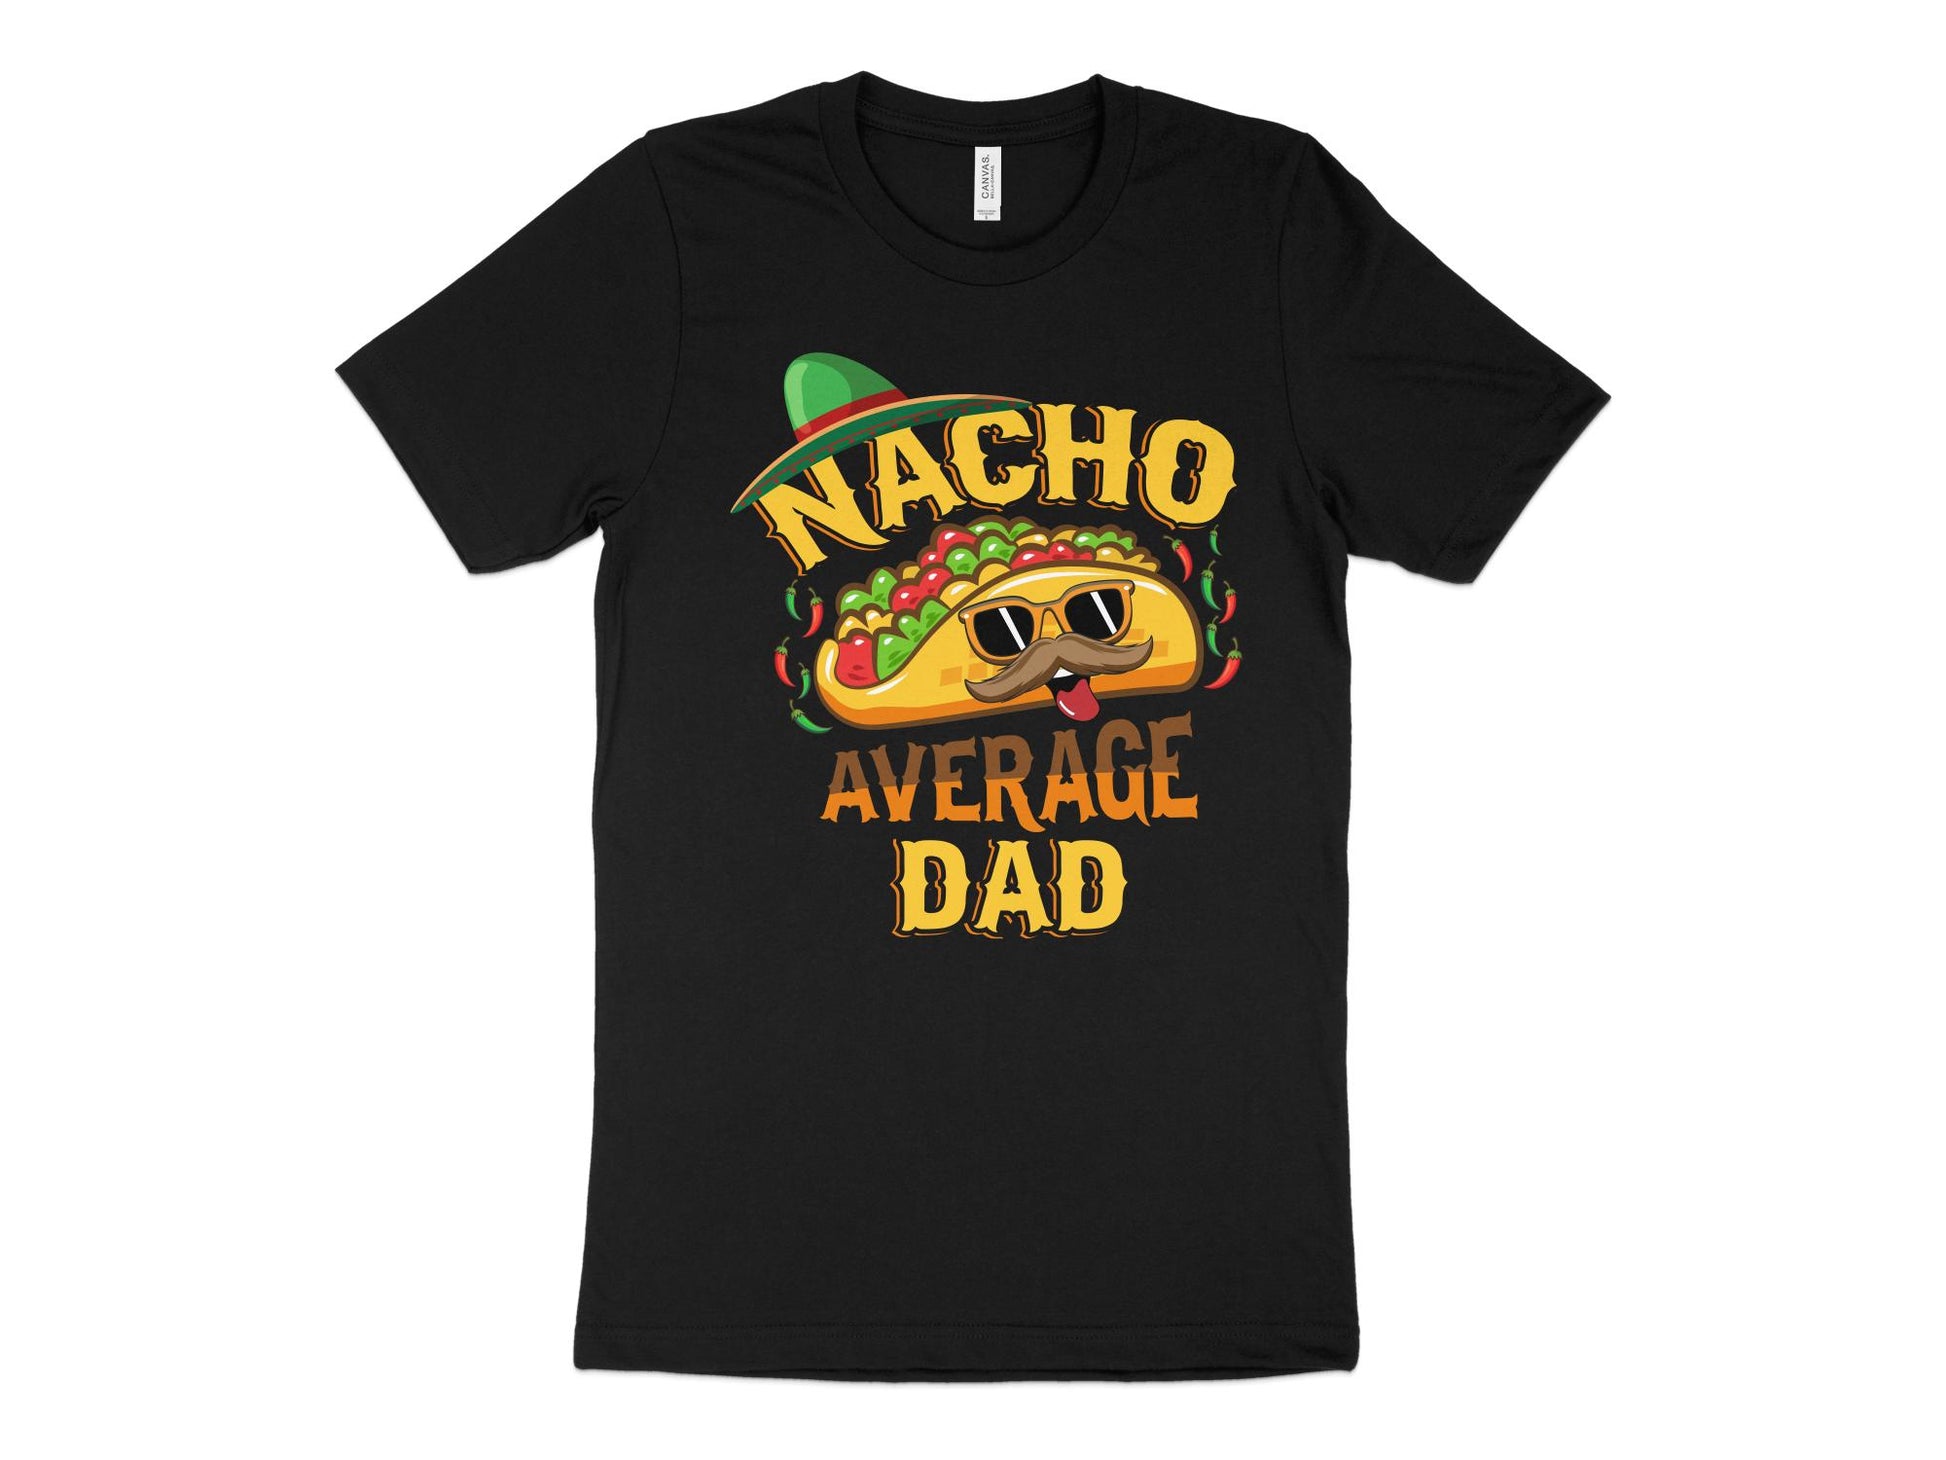 Nacho Average Dad Shirt, black